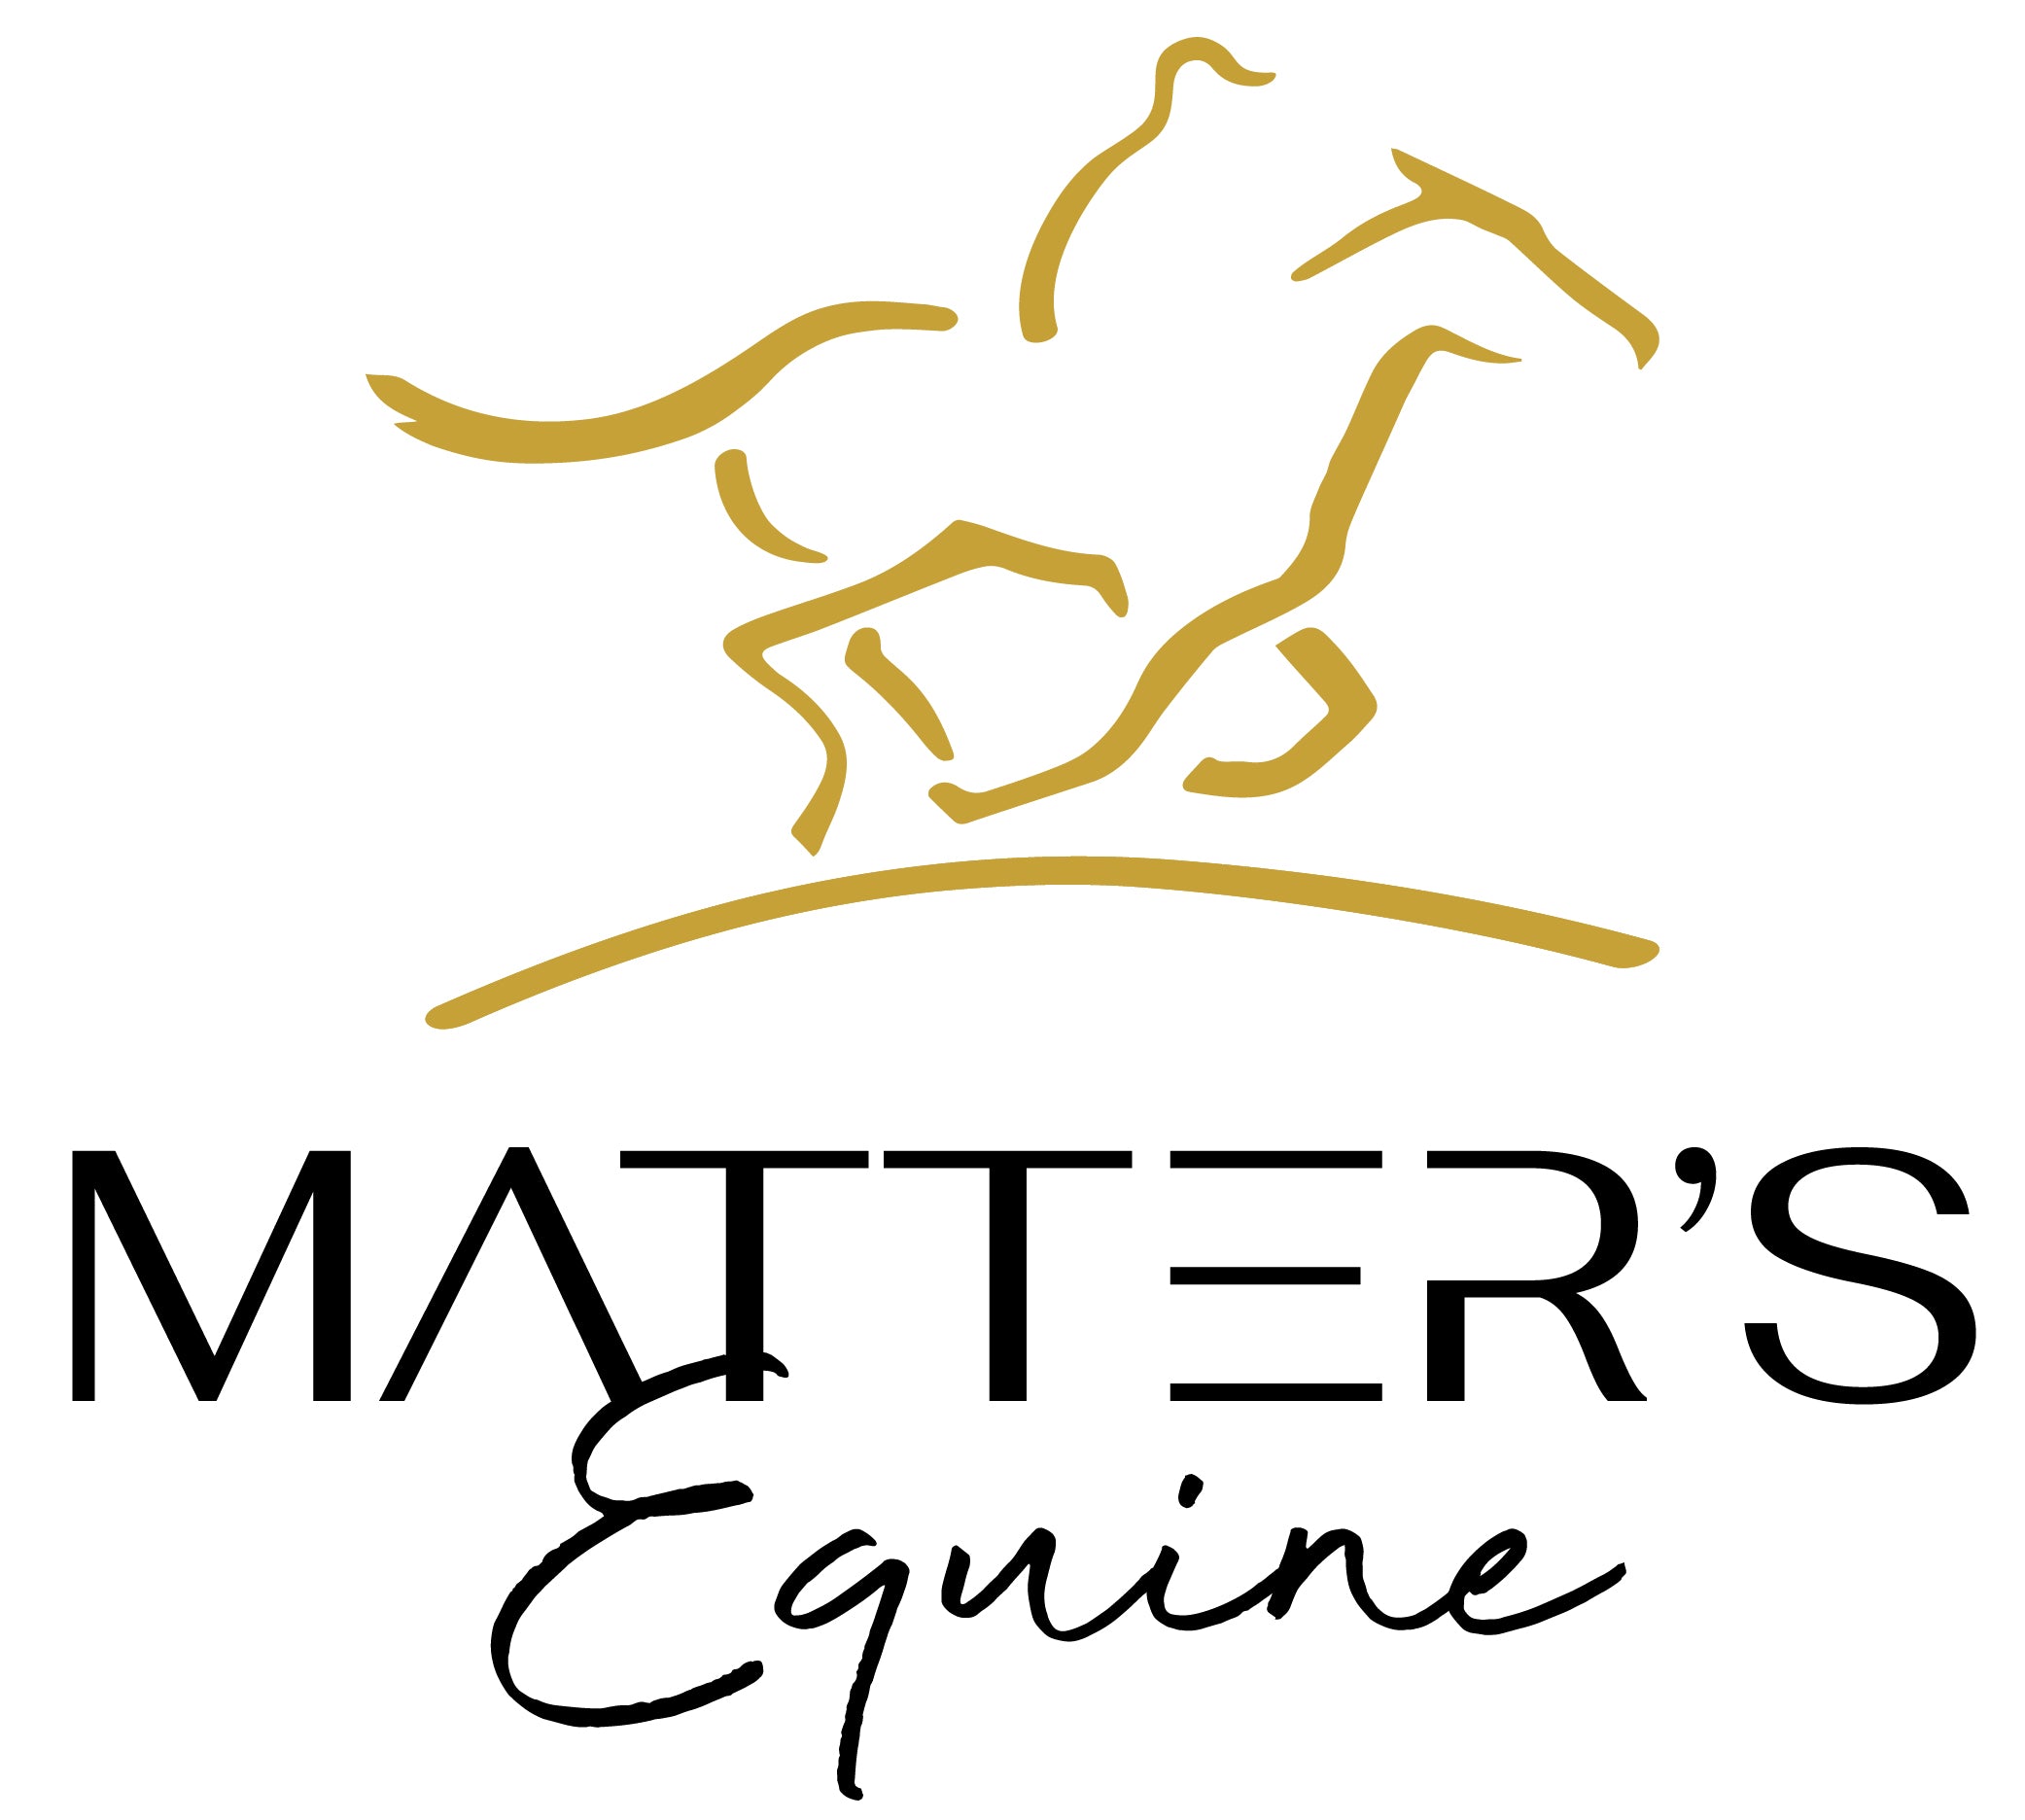 Matter's equine